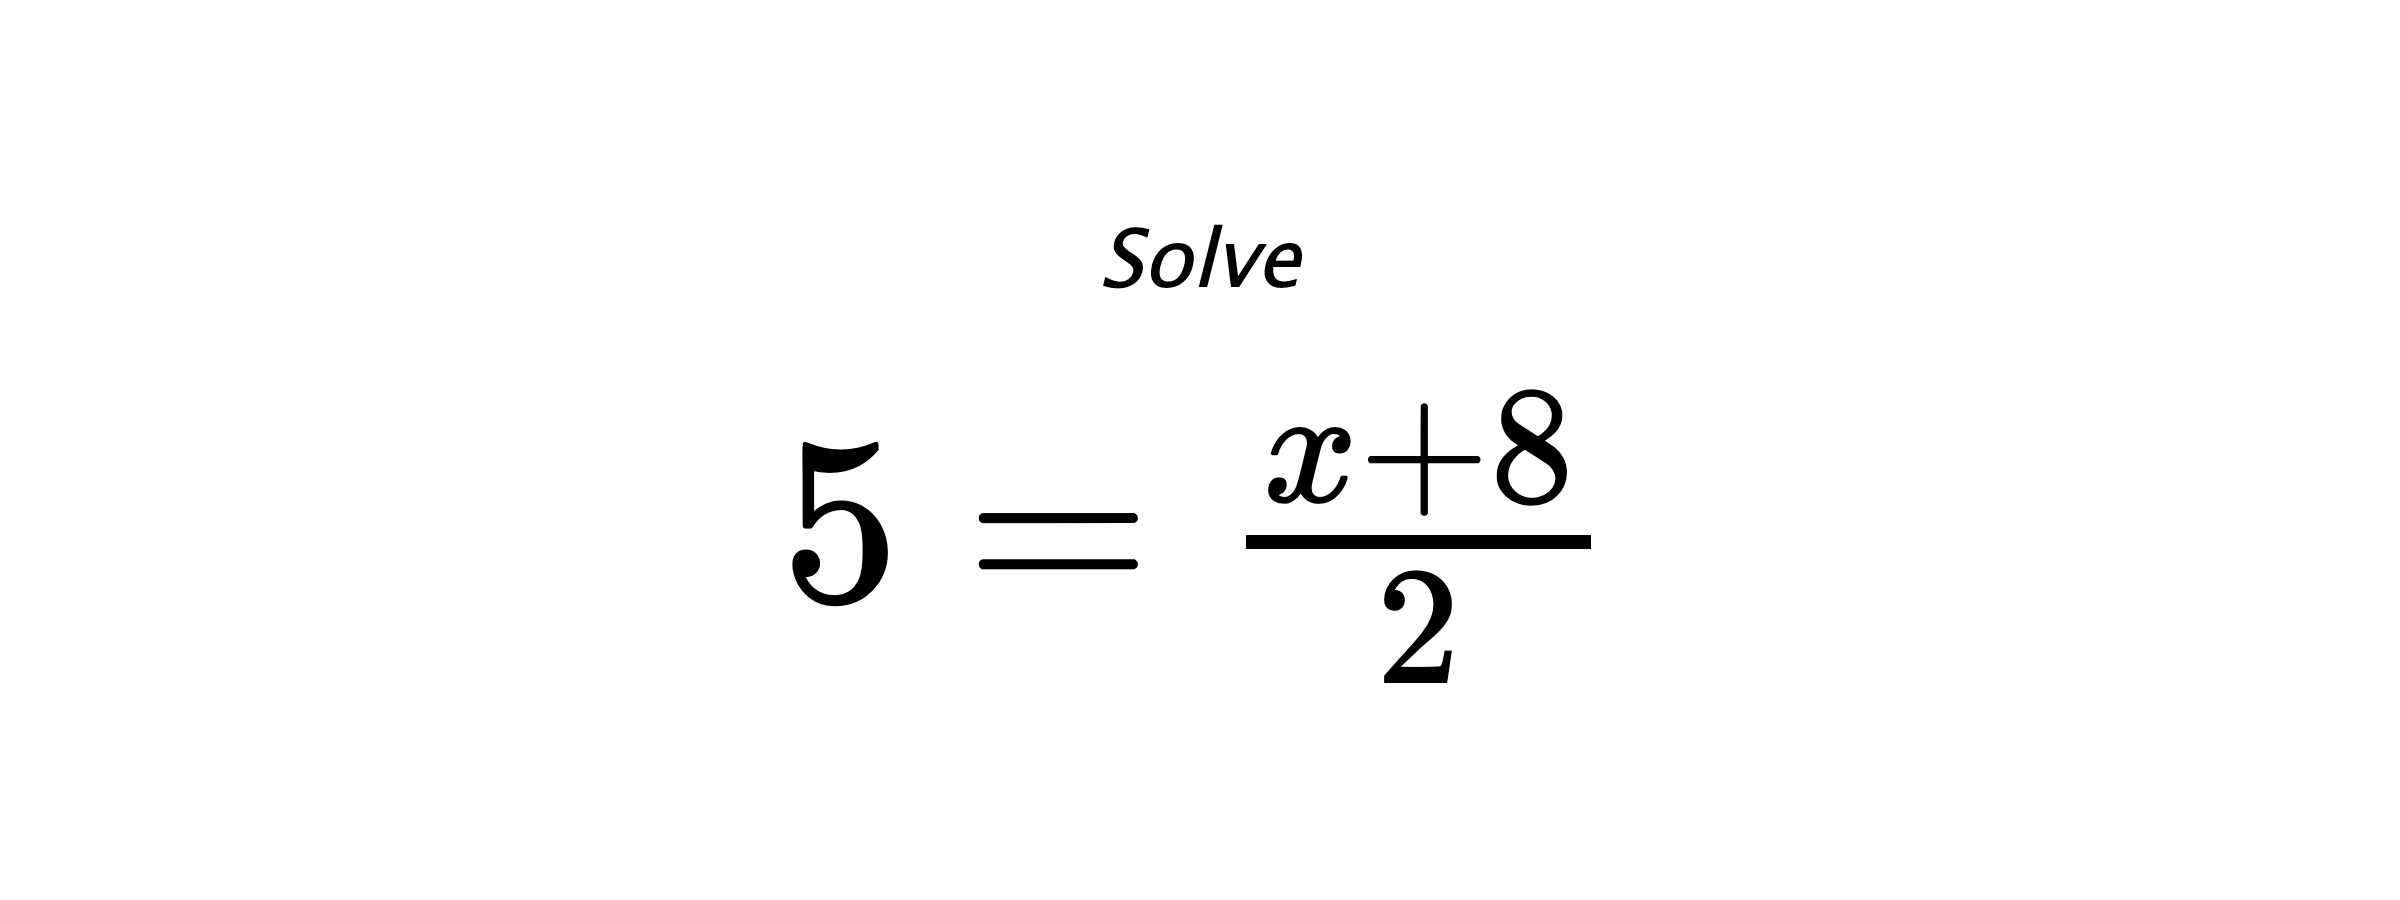 Solve $ 5=\frac{x+8}{2} $